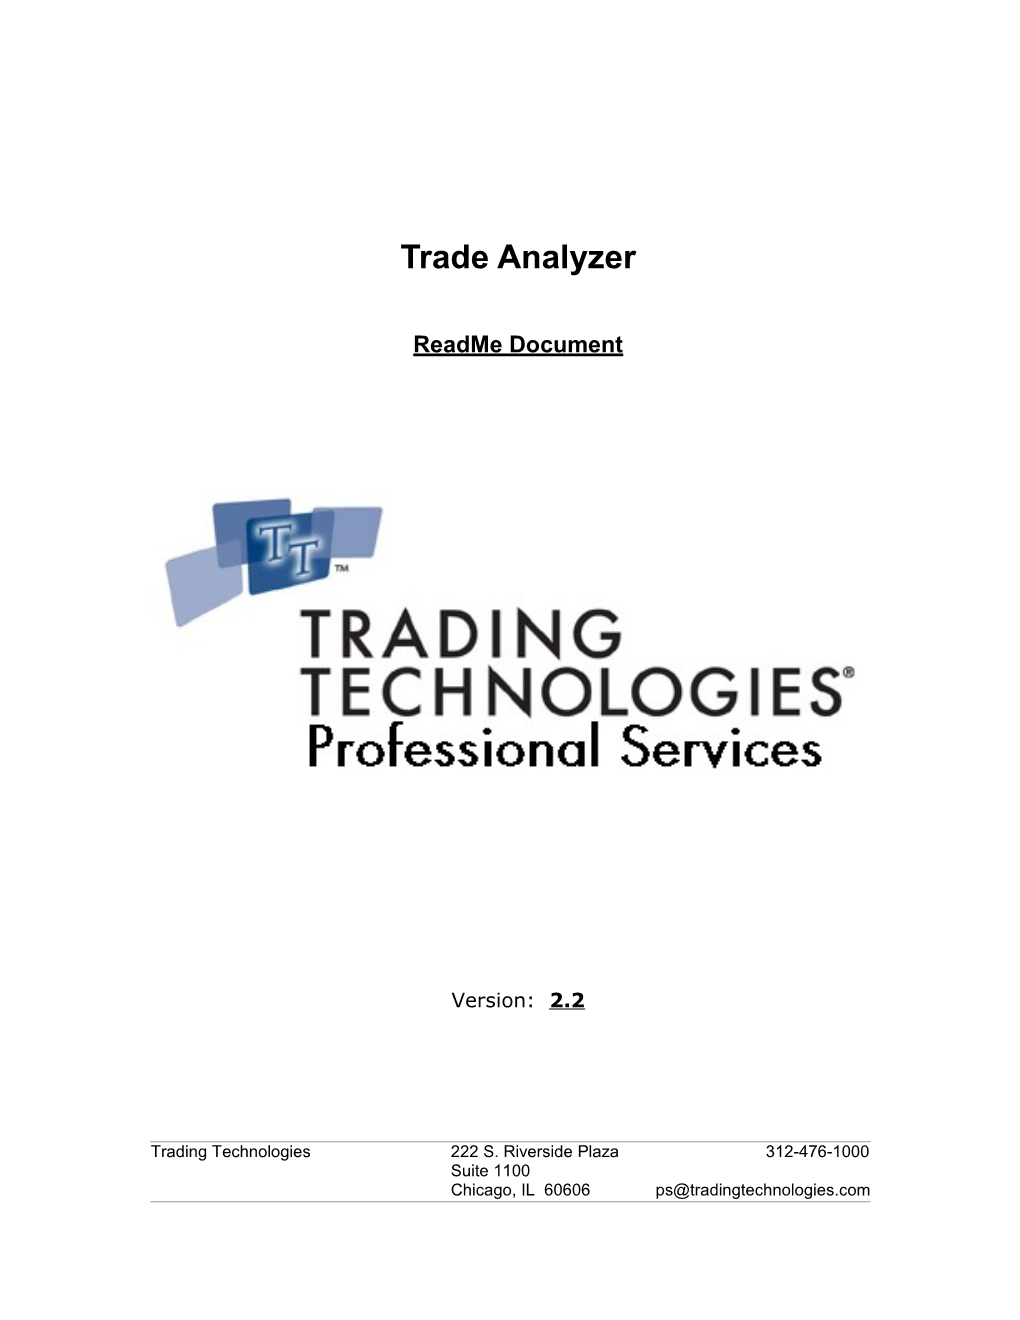 Trade Analyzer Read Me Document